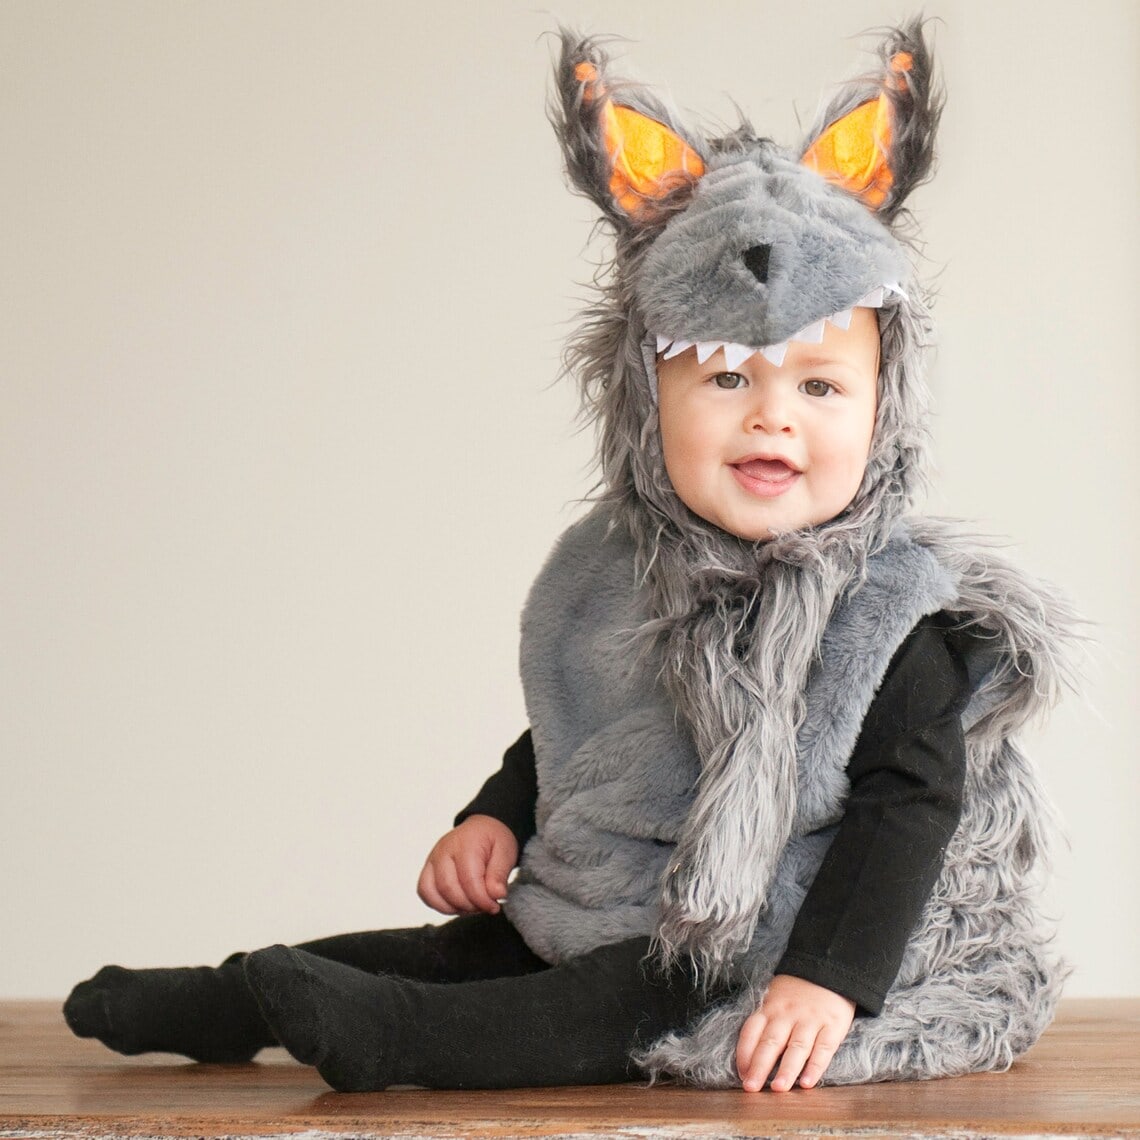 Big bad wolf baby costume